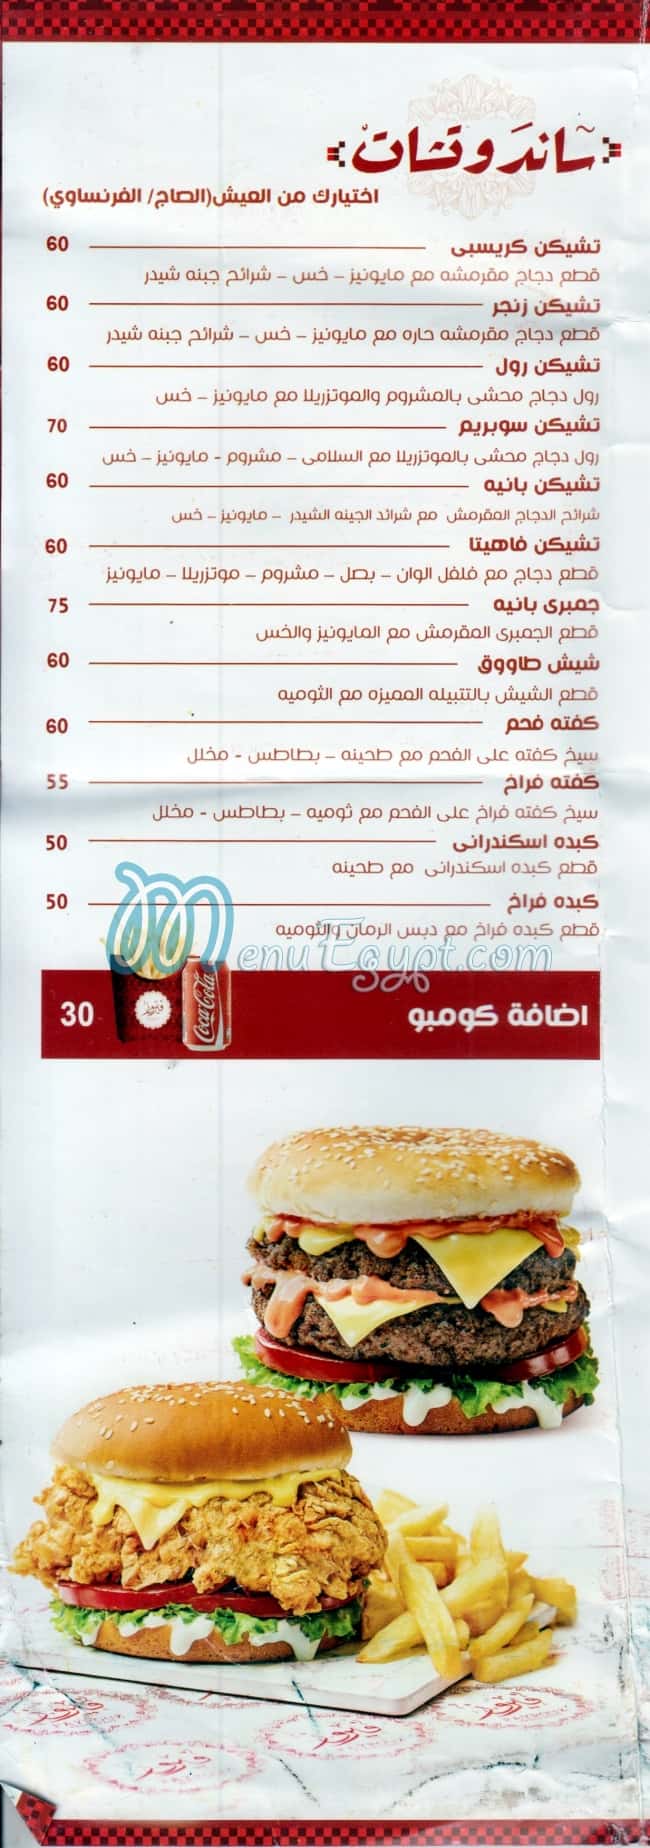 Fayroz menu prices